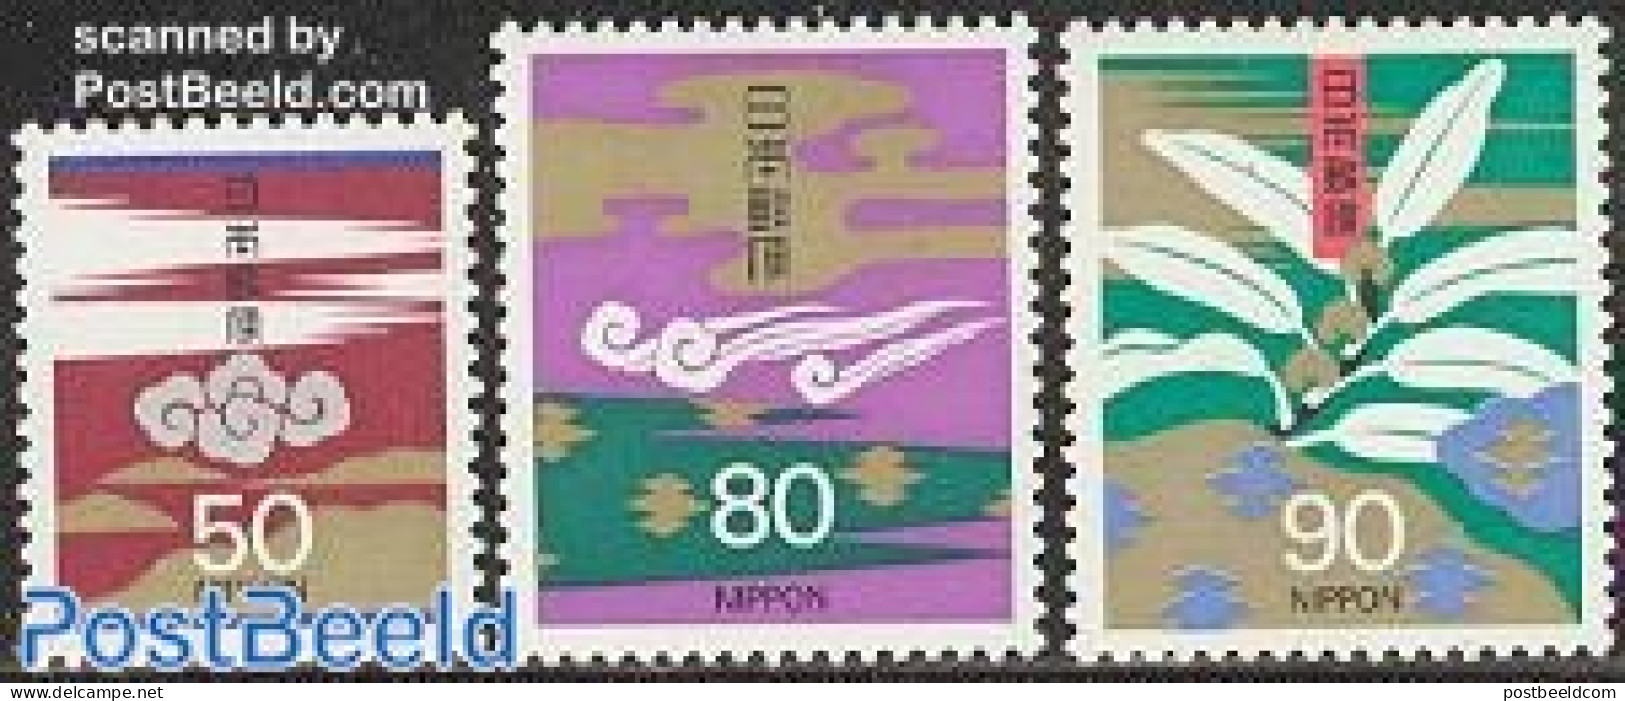 Japan 1995 Greeting Stamps 3v, Mint NH - Nuevos